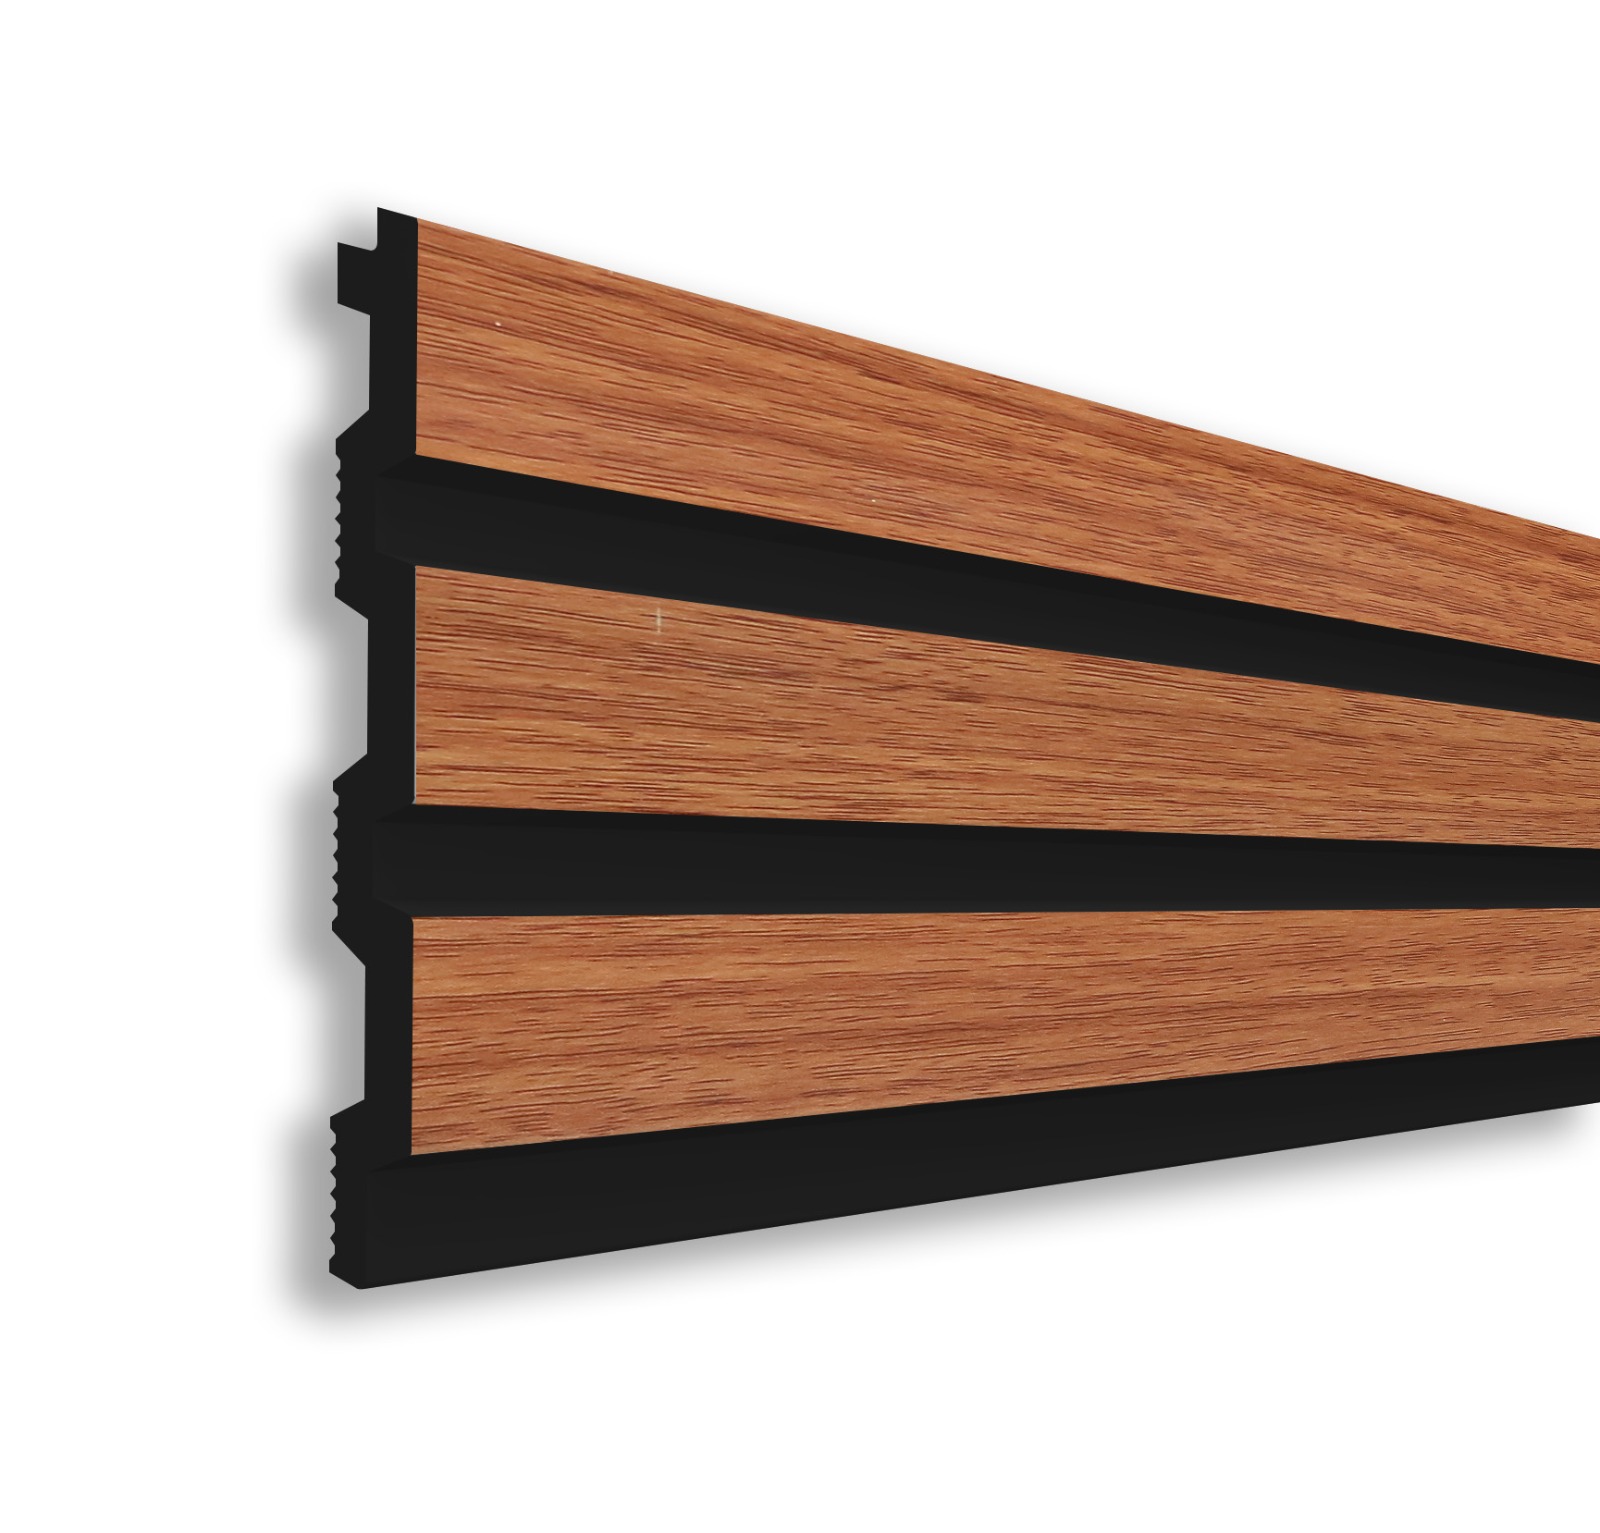 Riflaj decorativ din duropolimer, imitatie lemn, 290 x 11,5 x 1,2 cm D 404-103